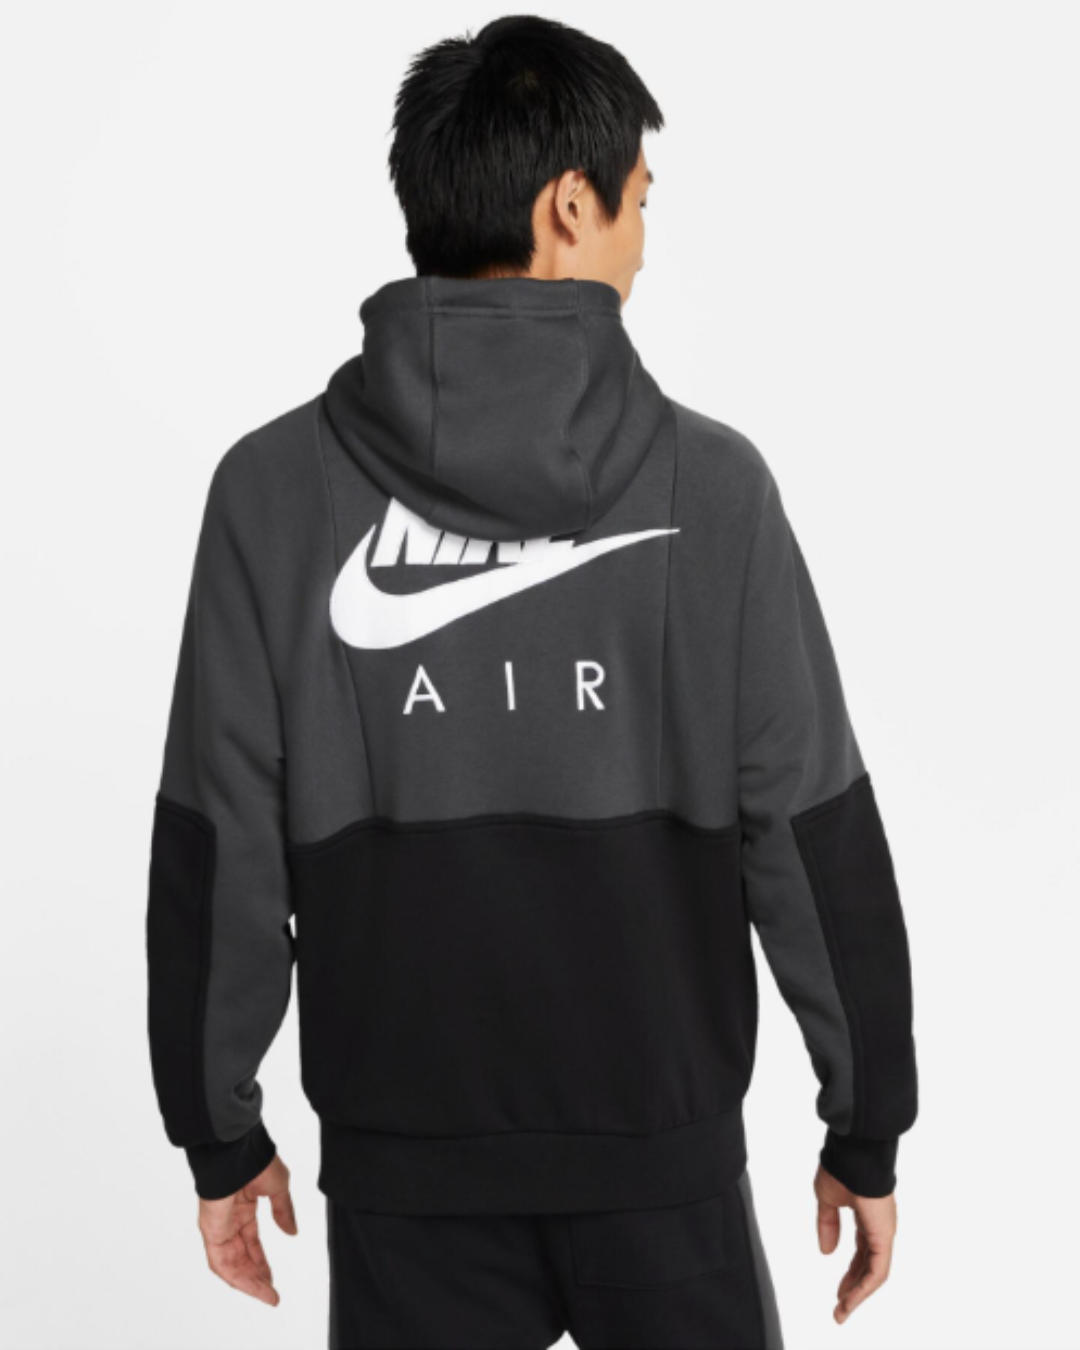 Nike Air fleece hooded jacket - Black/White